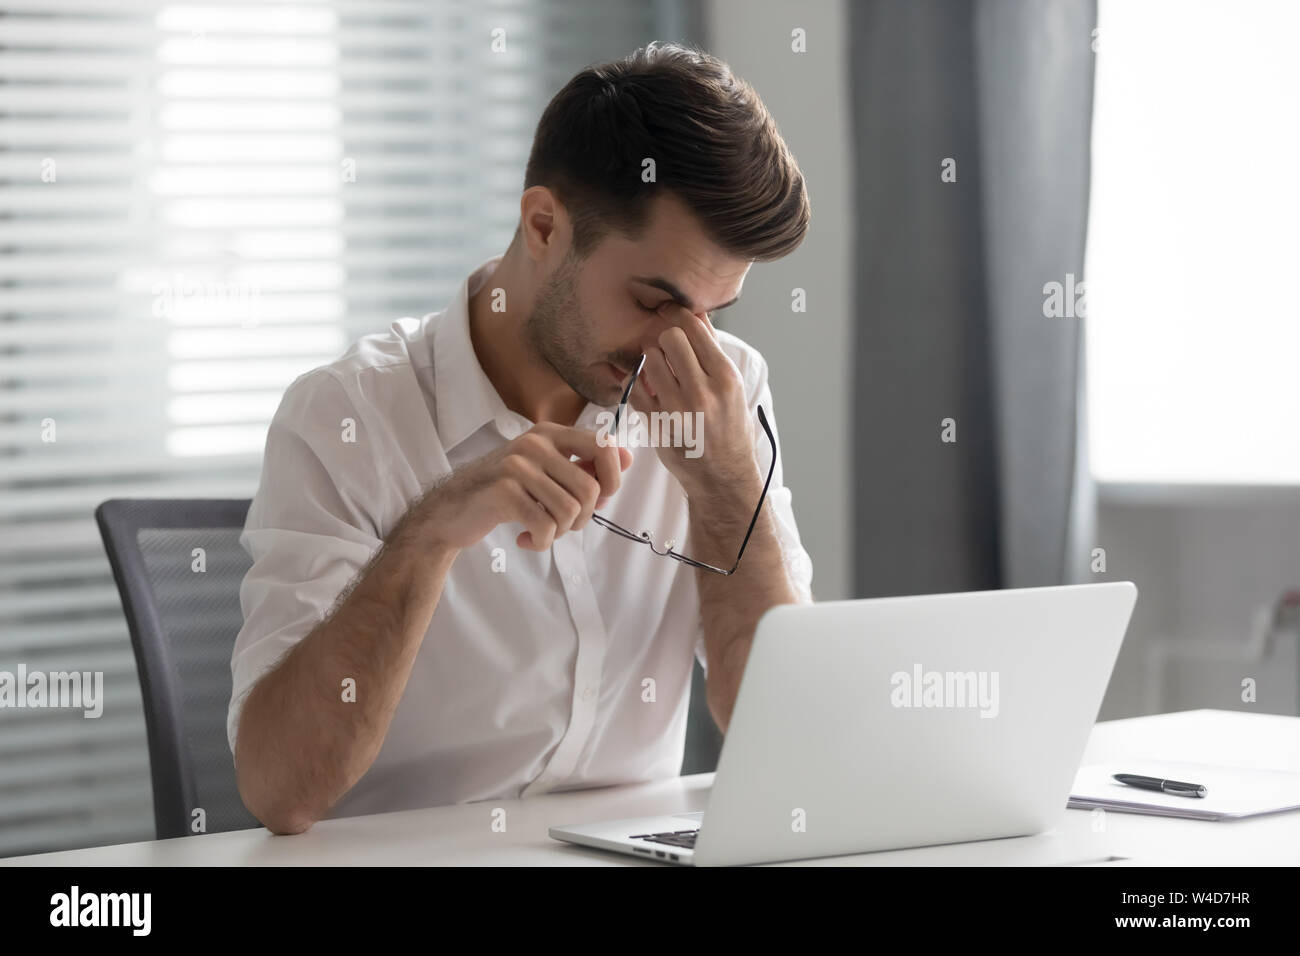 Overworked stressed business man holding glasses massage nose bridge Stock Photo